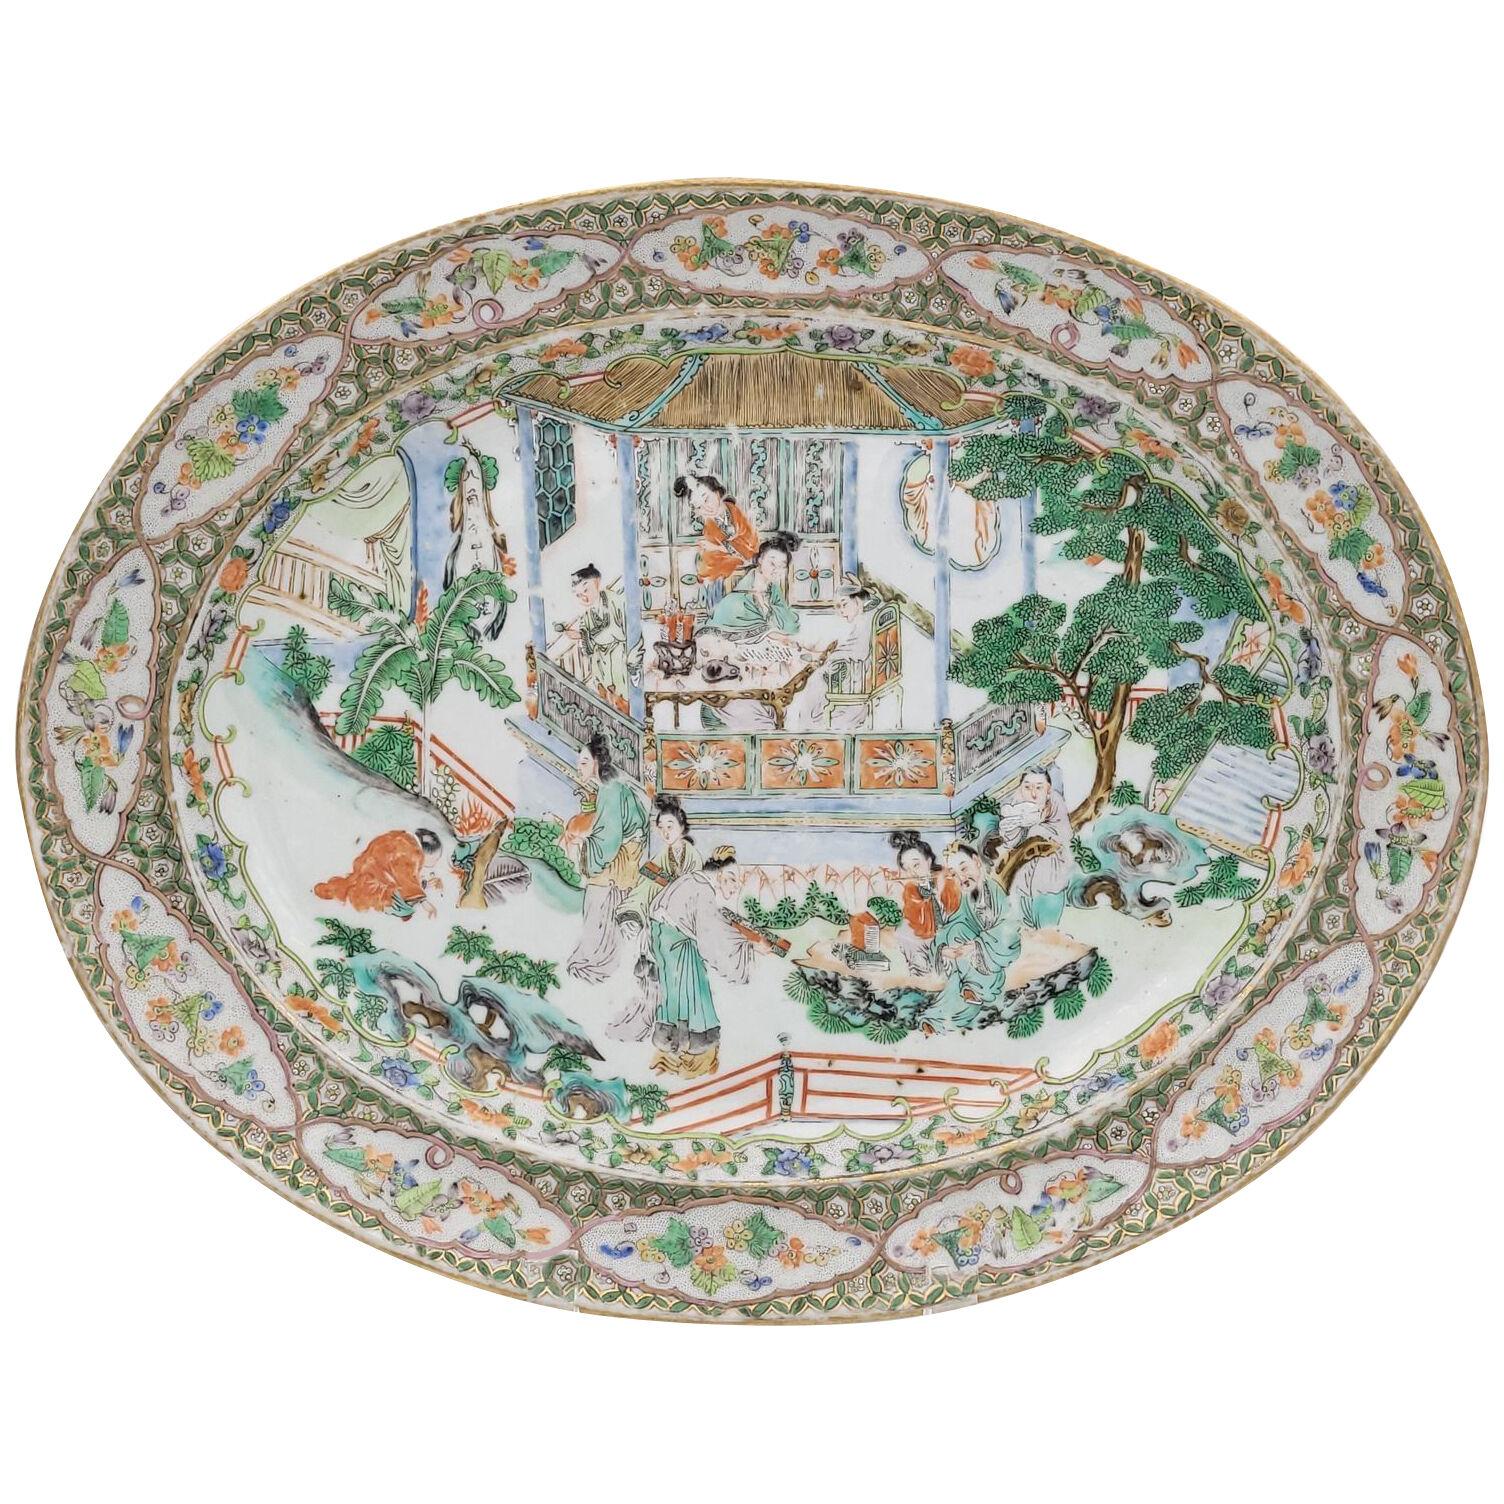 19th Century Famille Verte Platter, China circa 1850